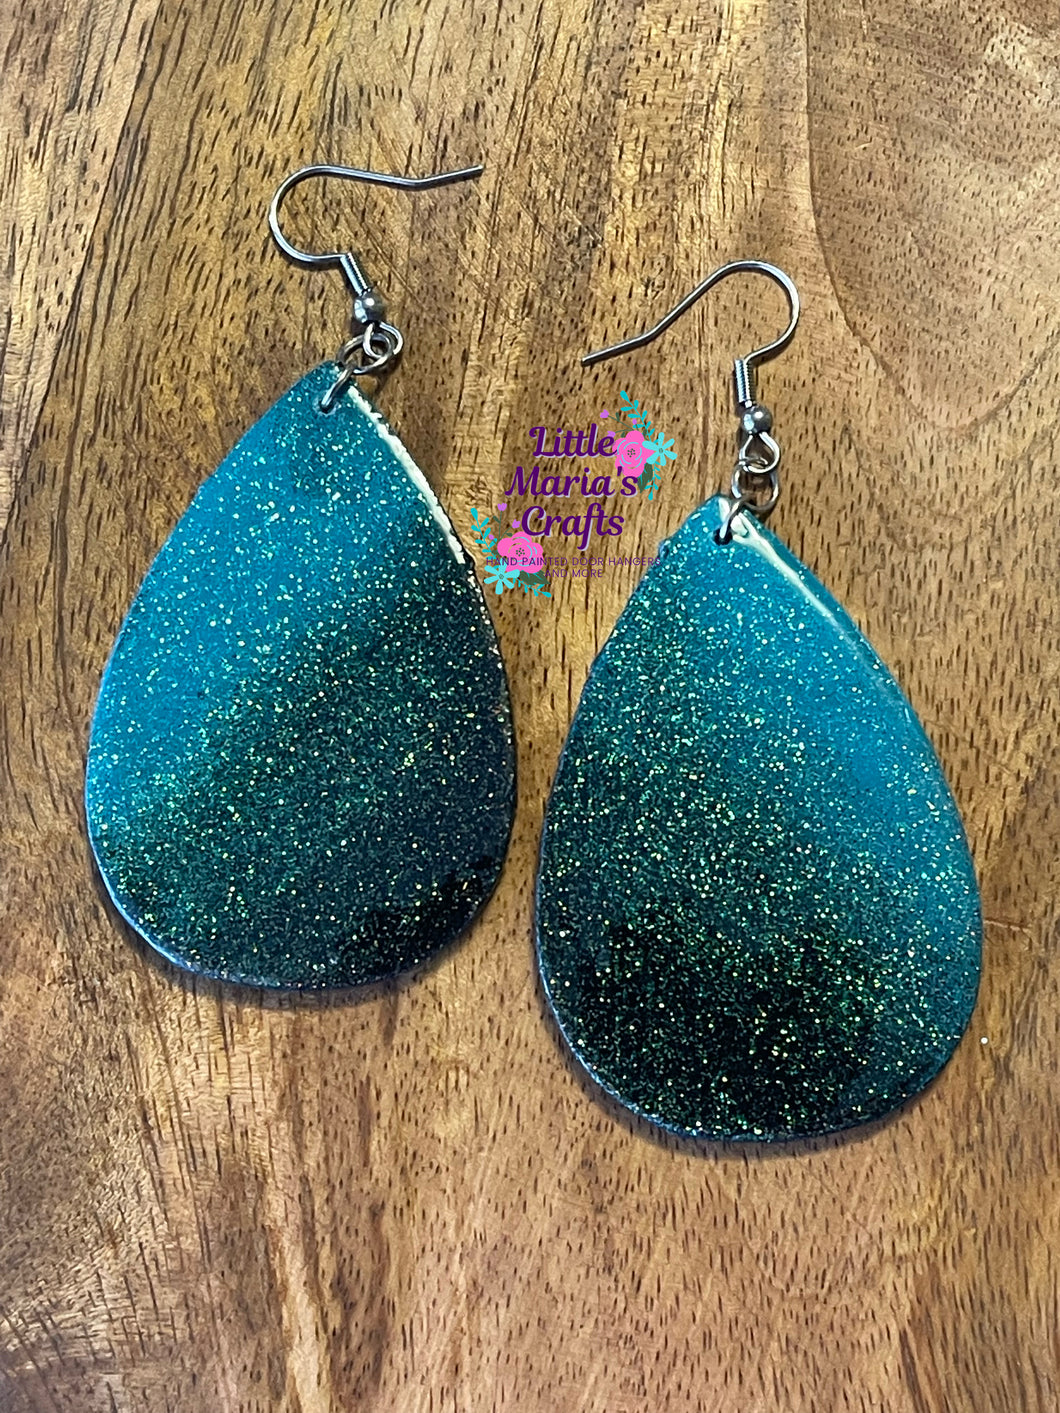 Earrings-Turquoise and Black Glitter Teardrop